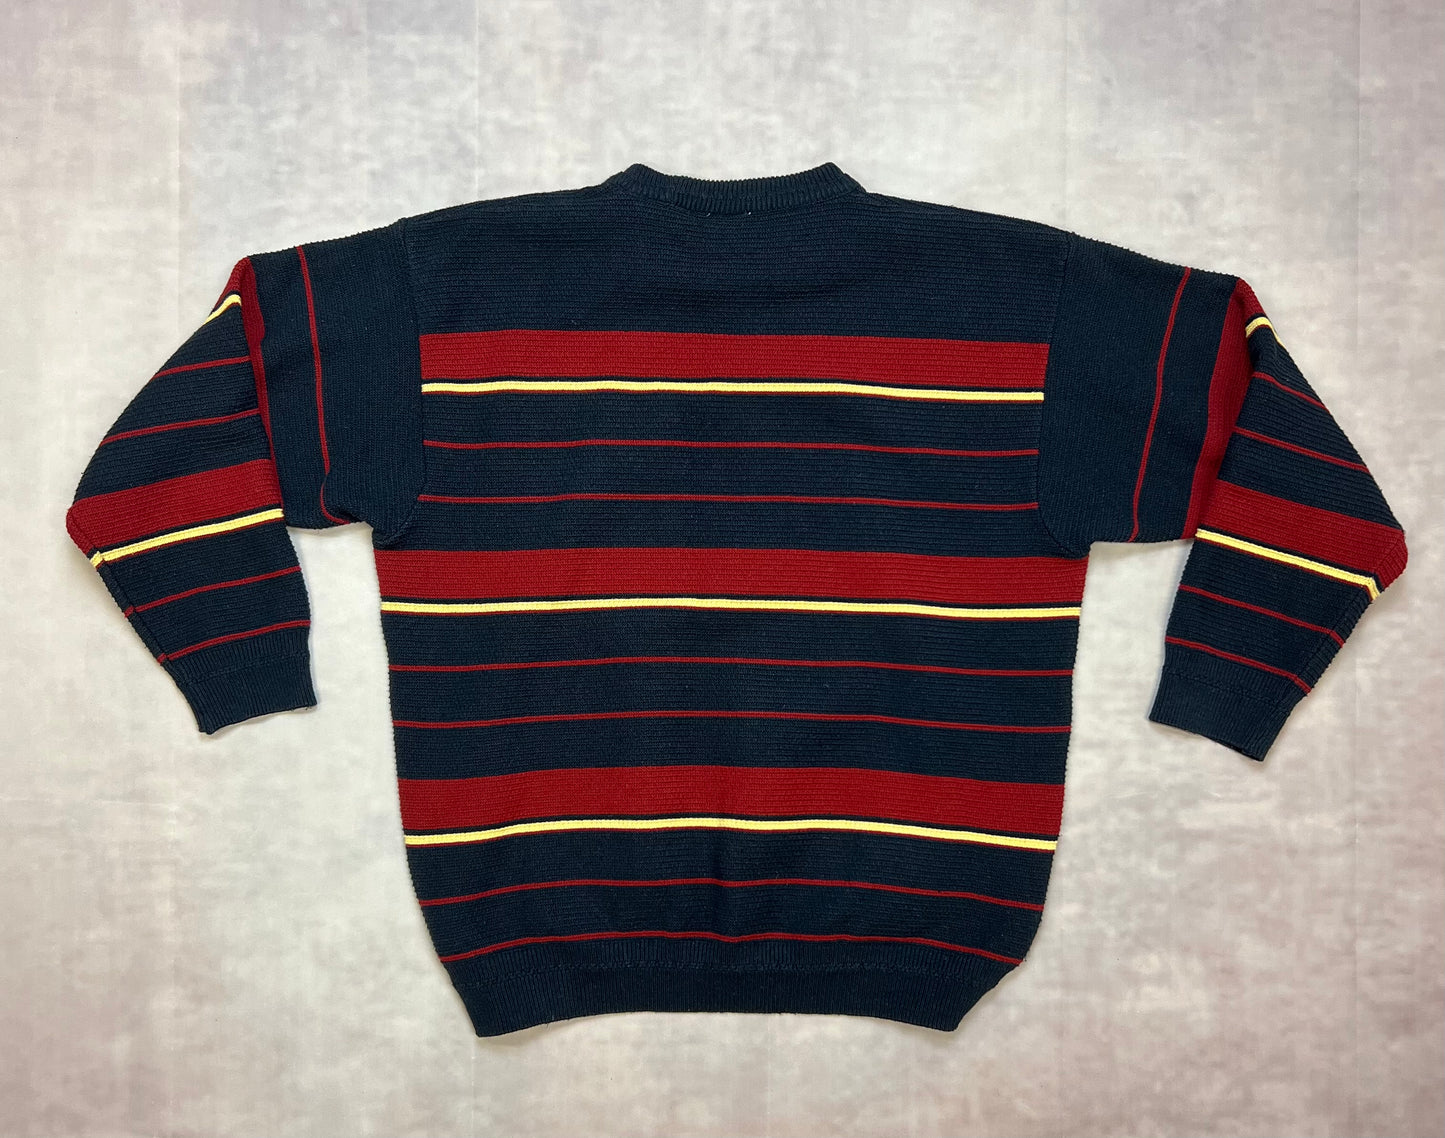 Vintage Lacoste Sweater (M)